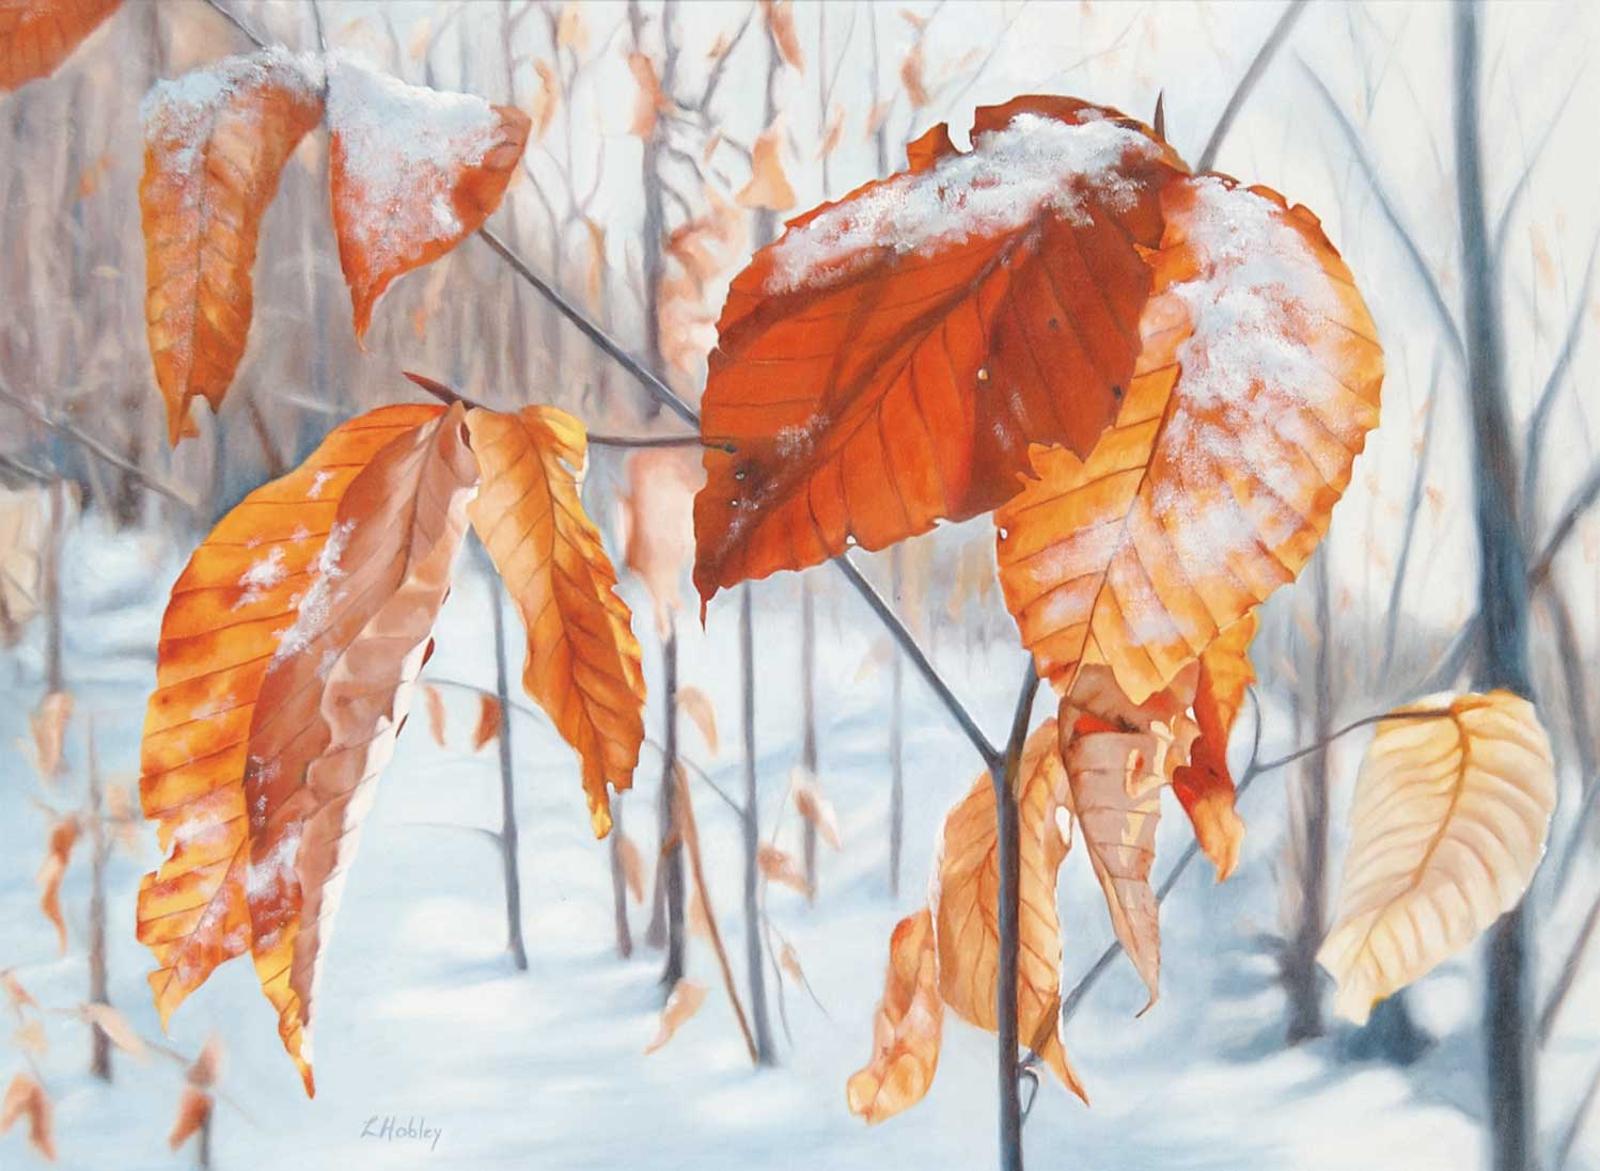 Linda Hobley - Untitled - Fall Leaves